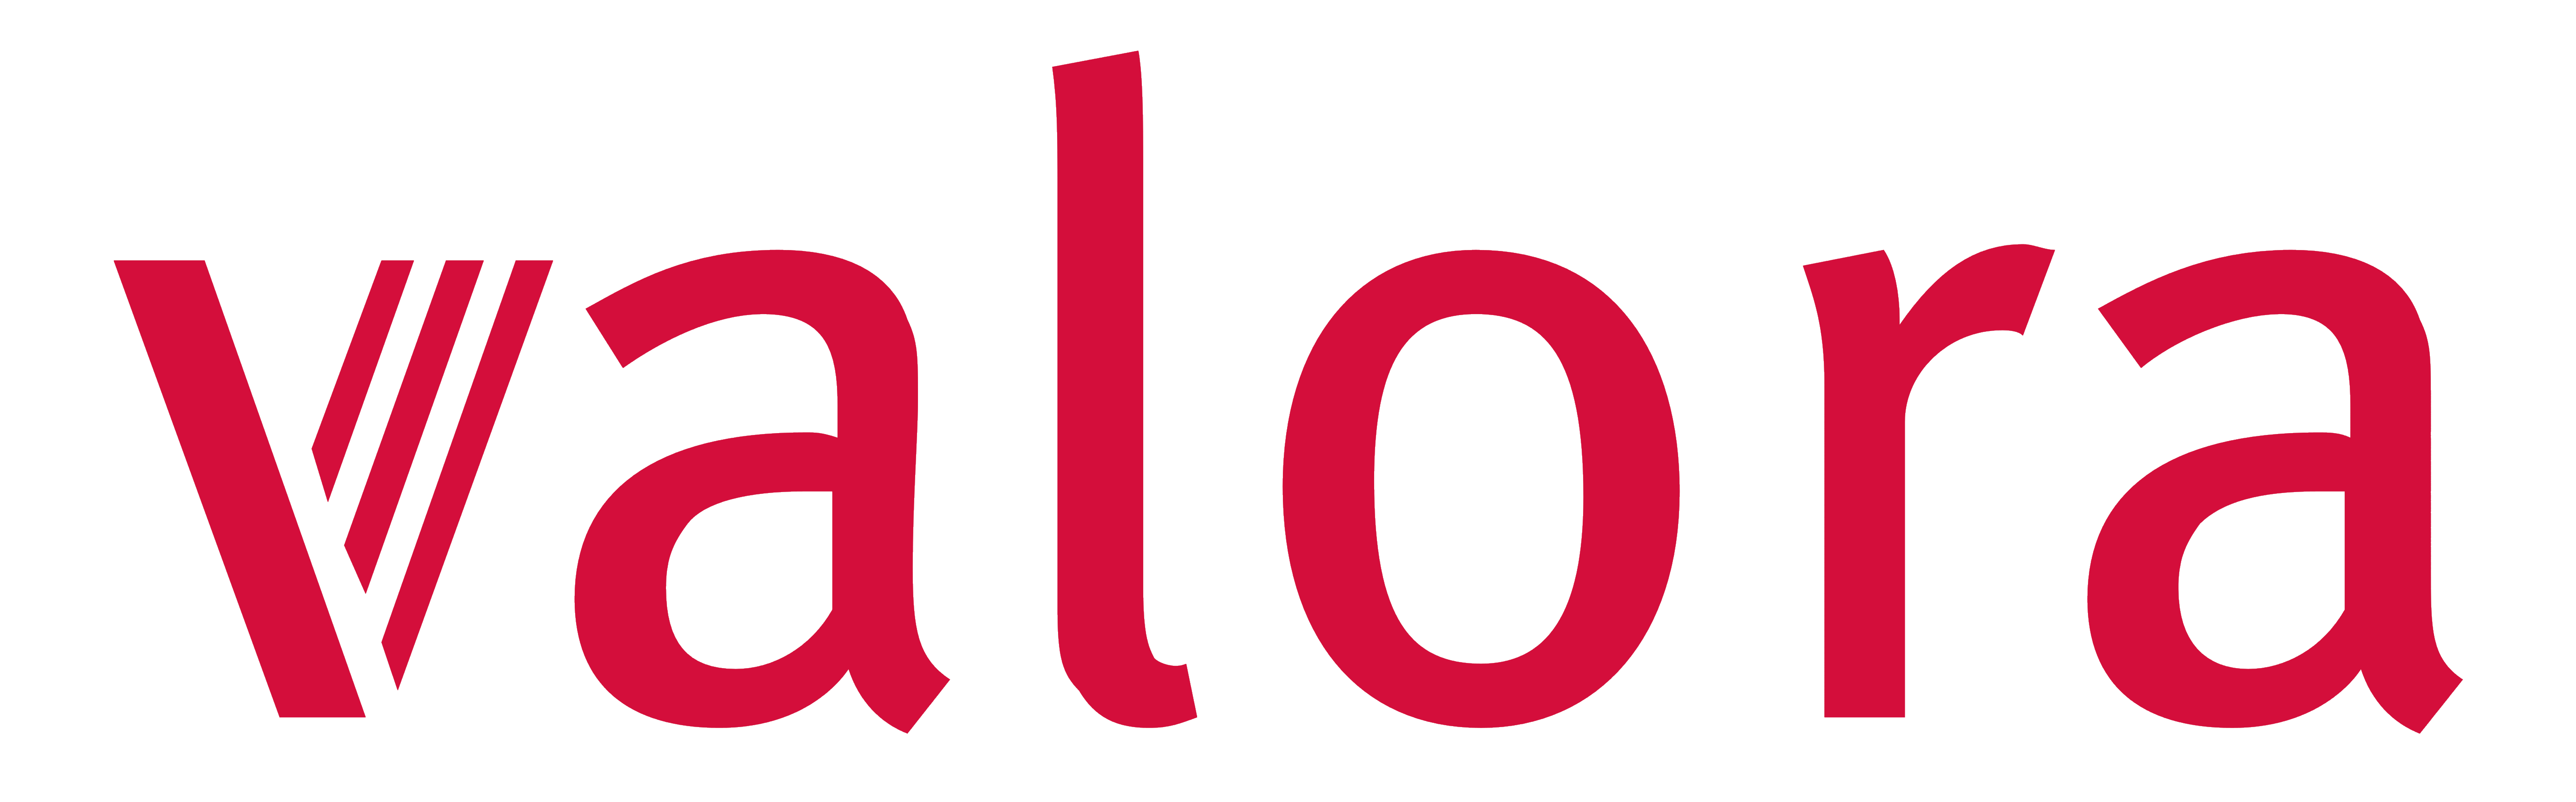 Valora logo, logotype